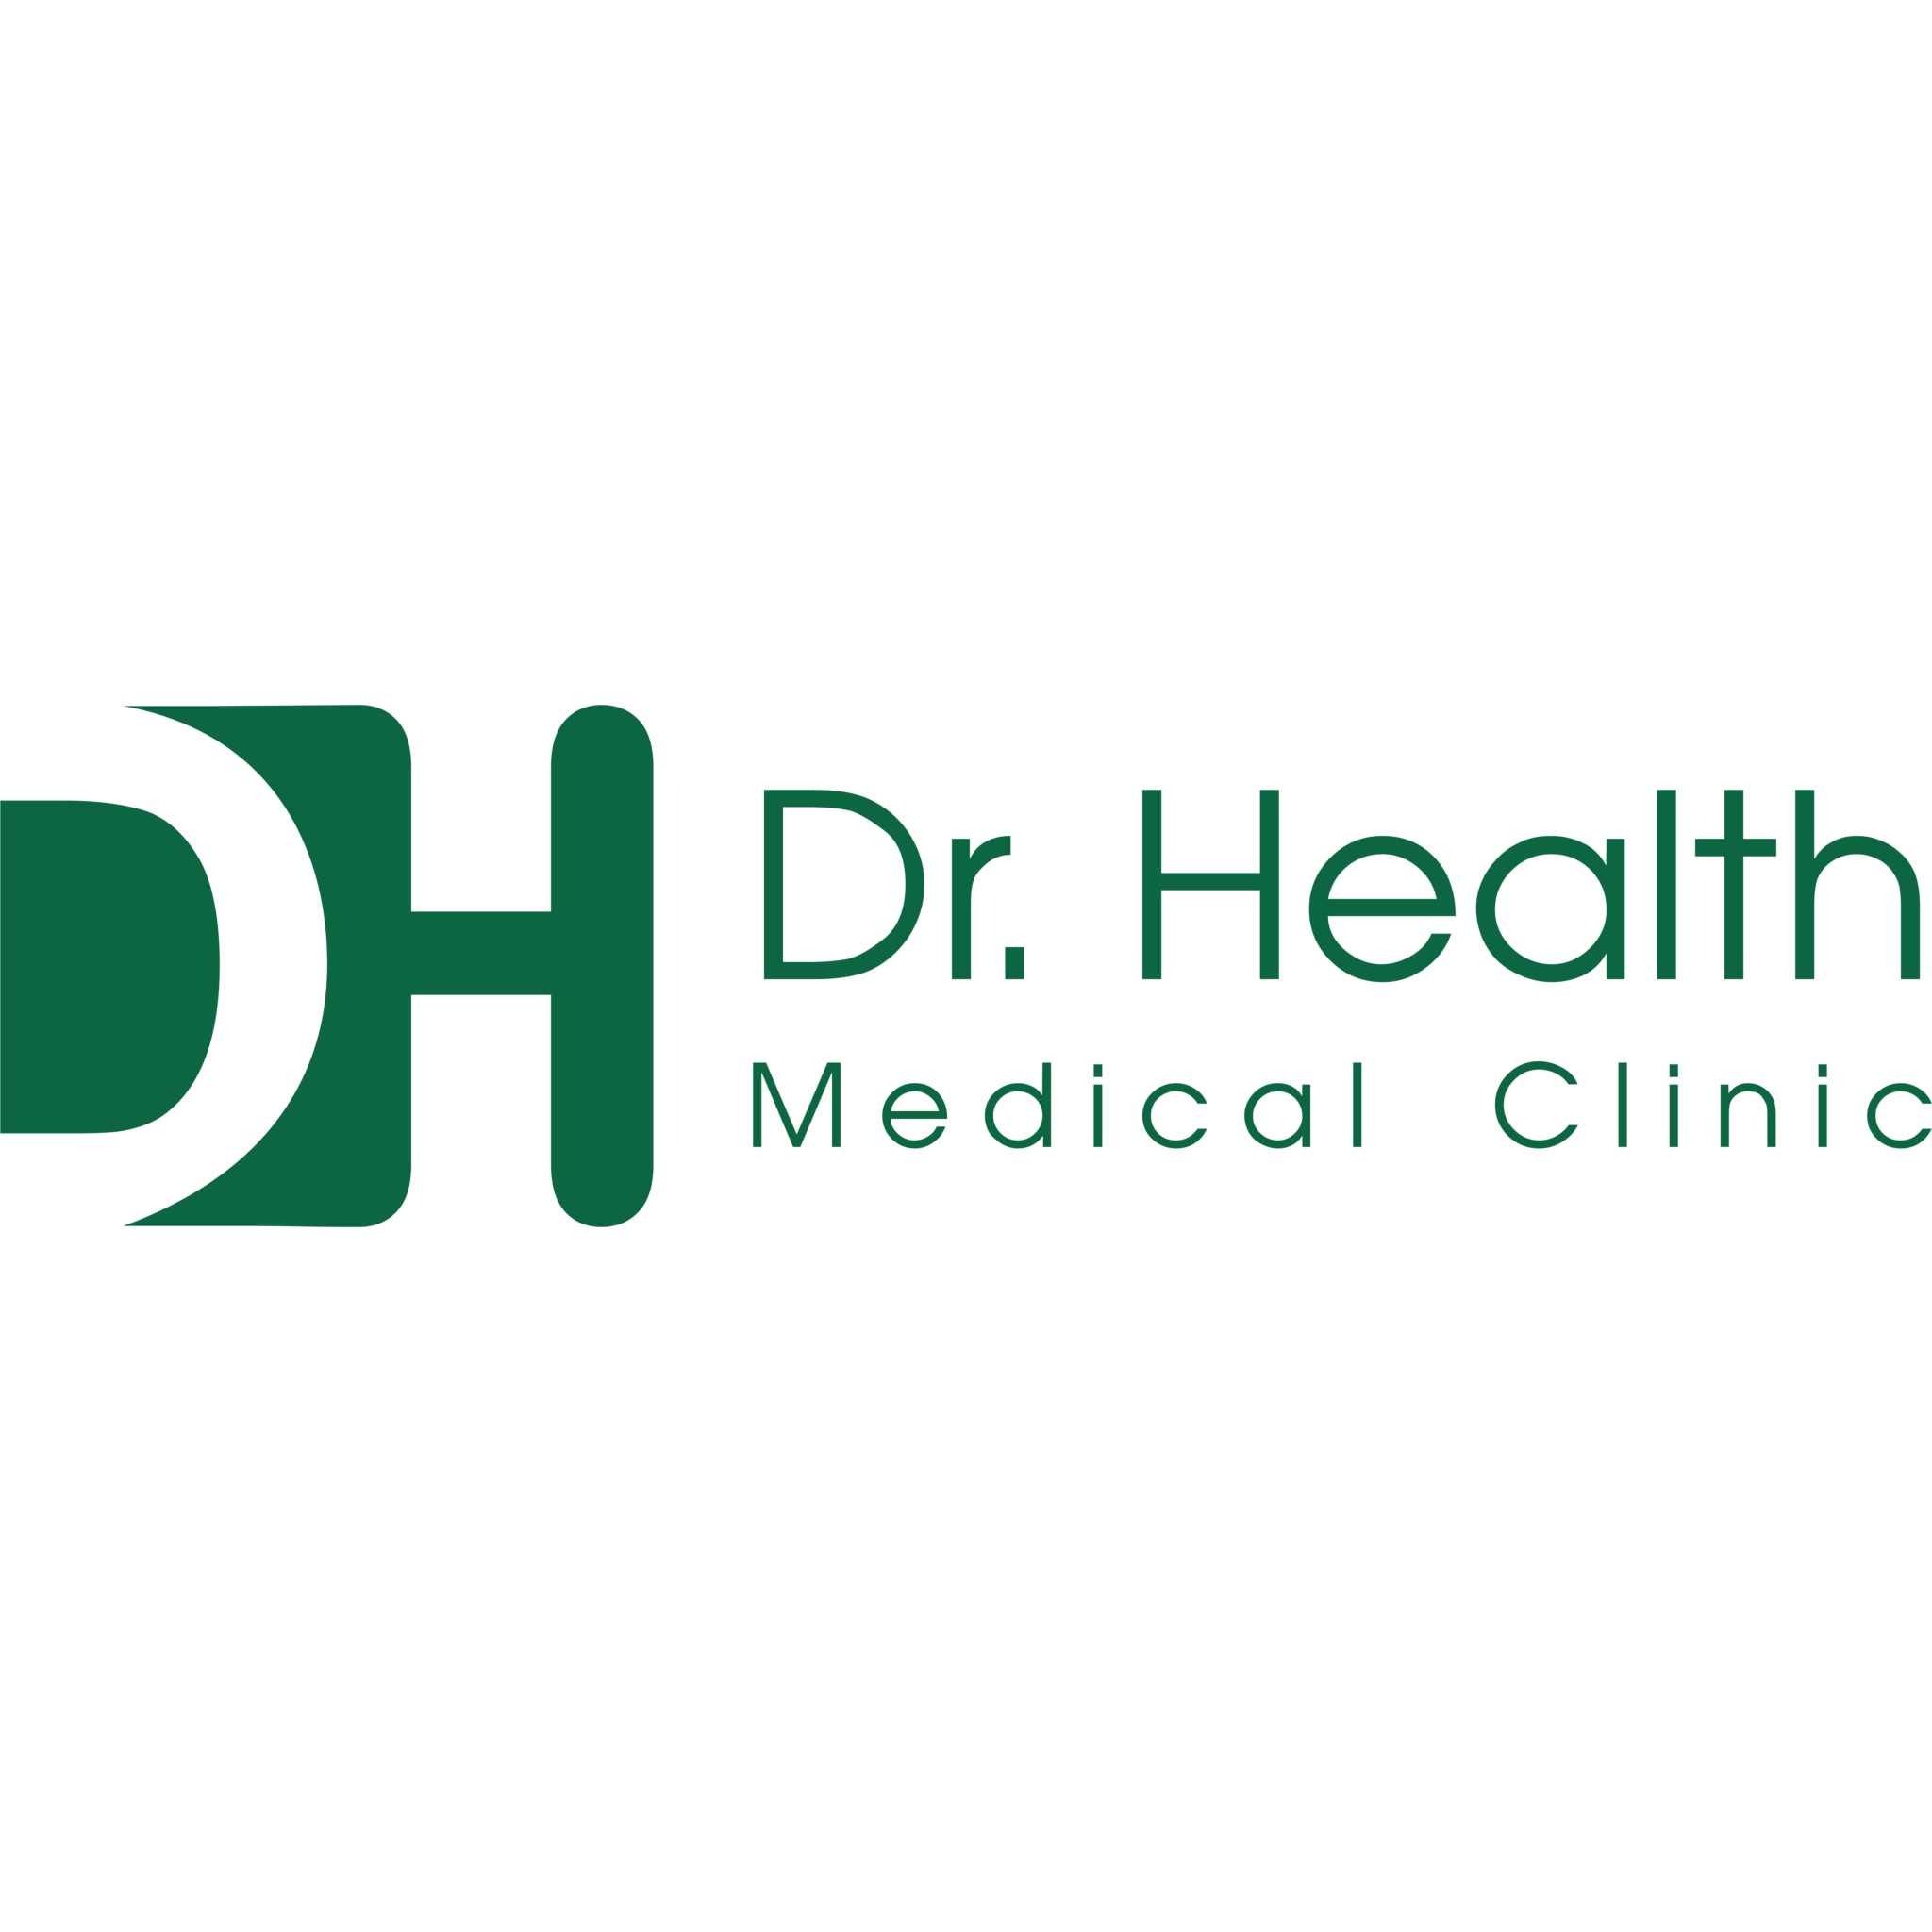 Dr. Health Medical Clinic: Dr. Hamed Tashakkori-Nia Newmarket (905)898-2931